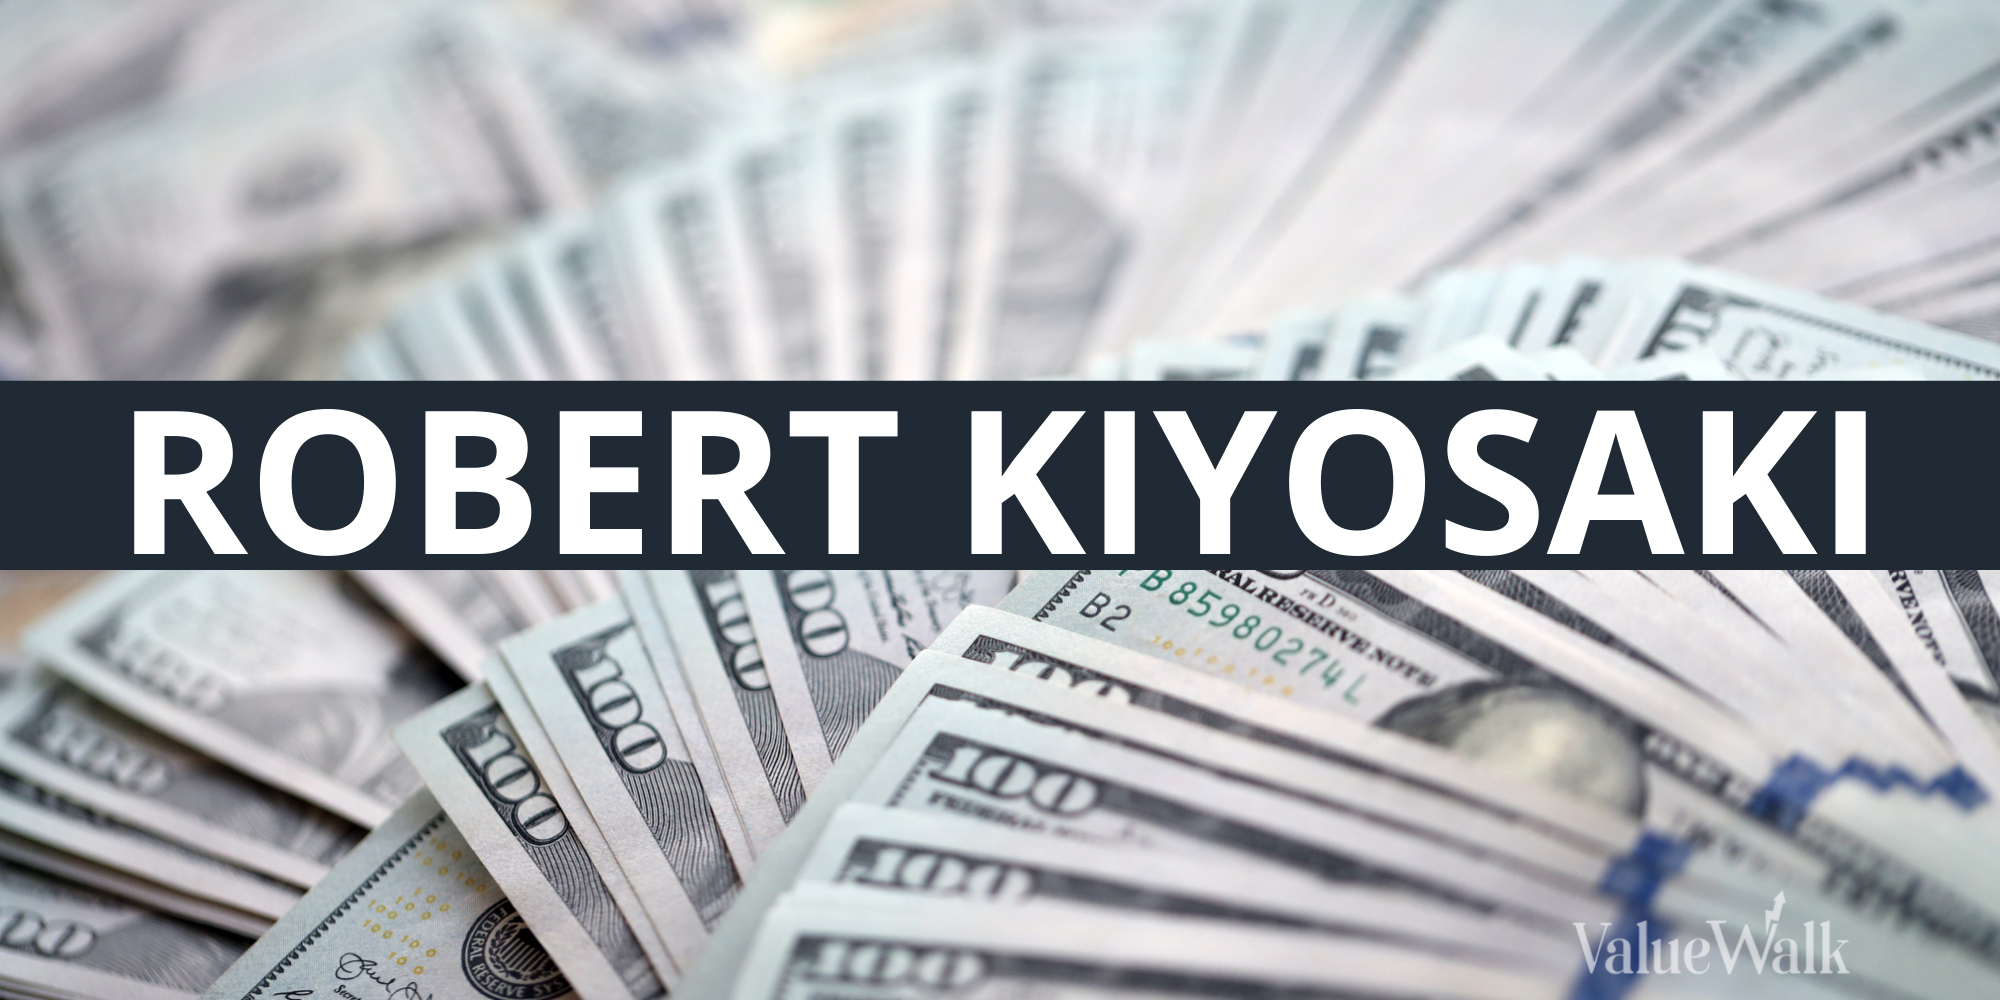 Robert Kiyosaki net worth